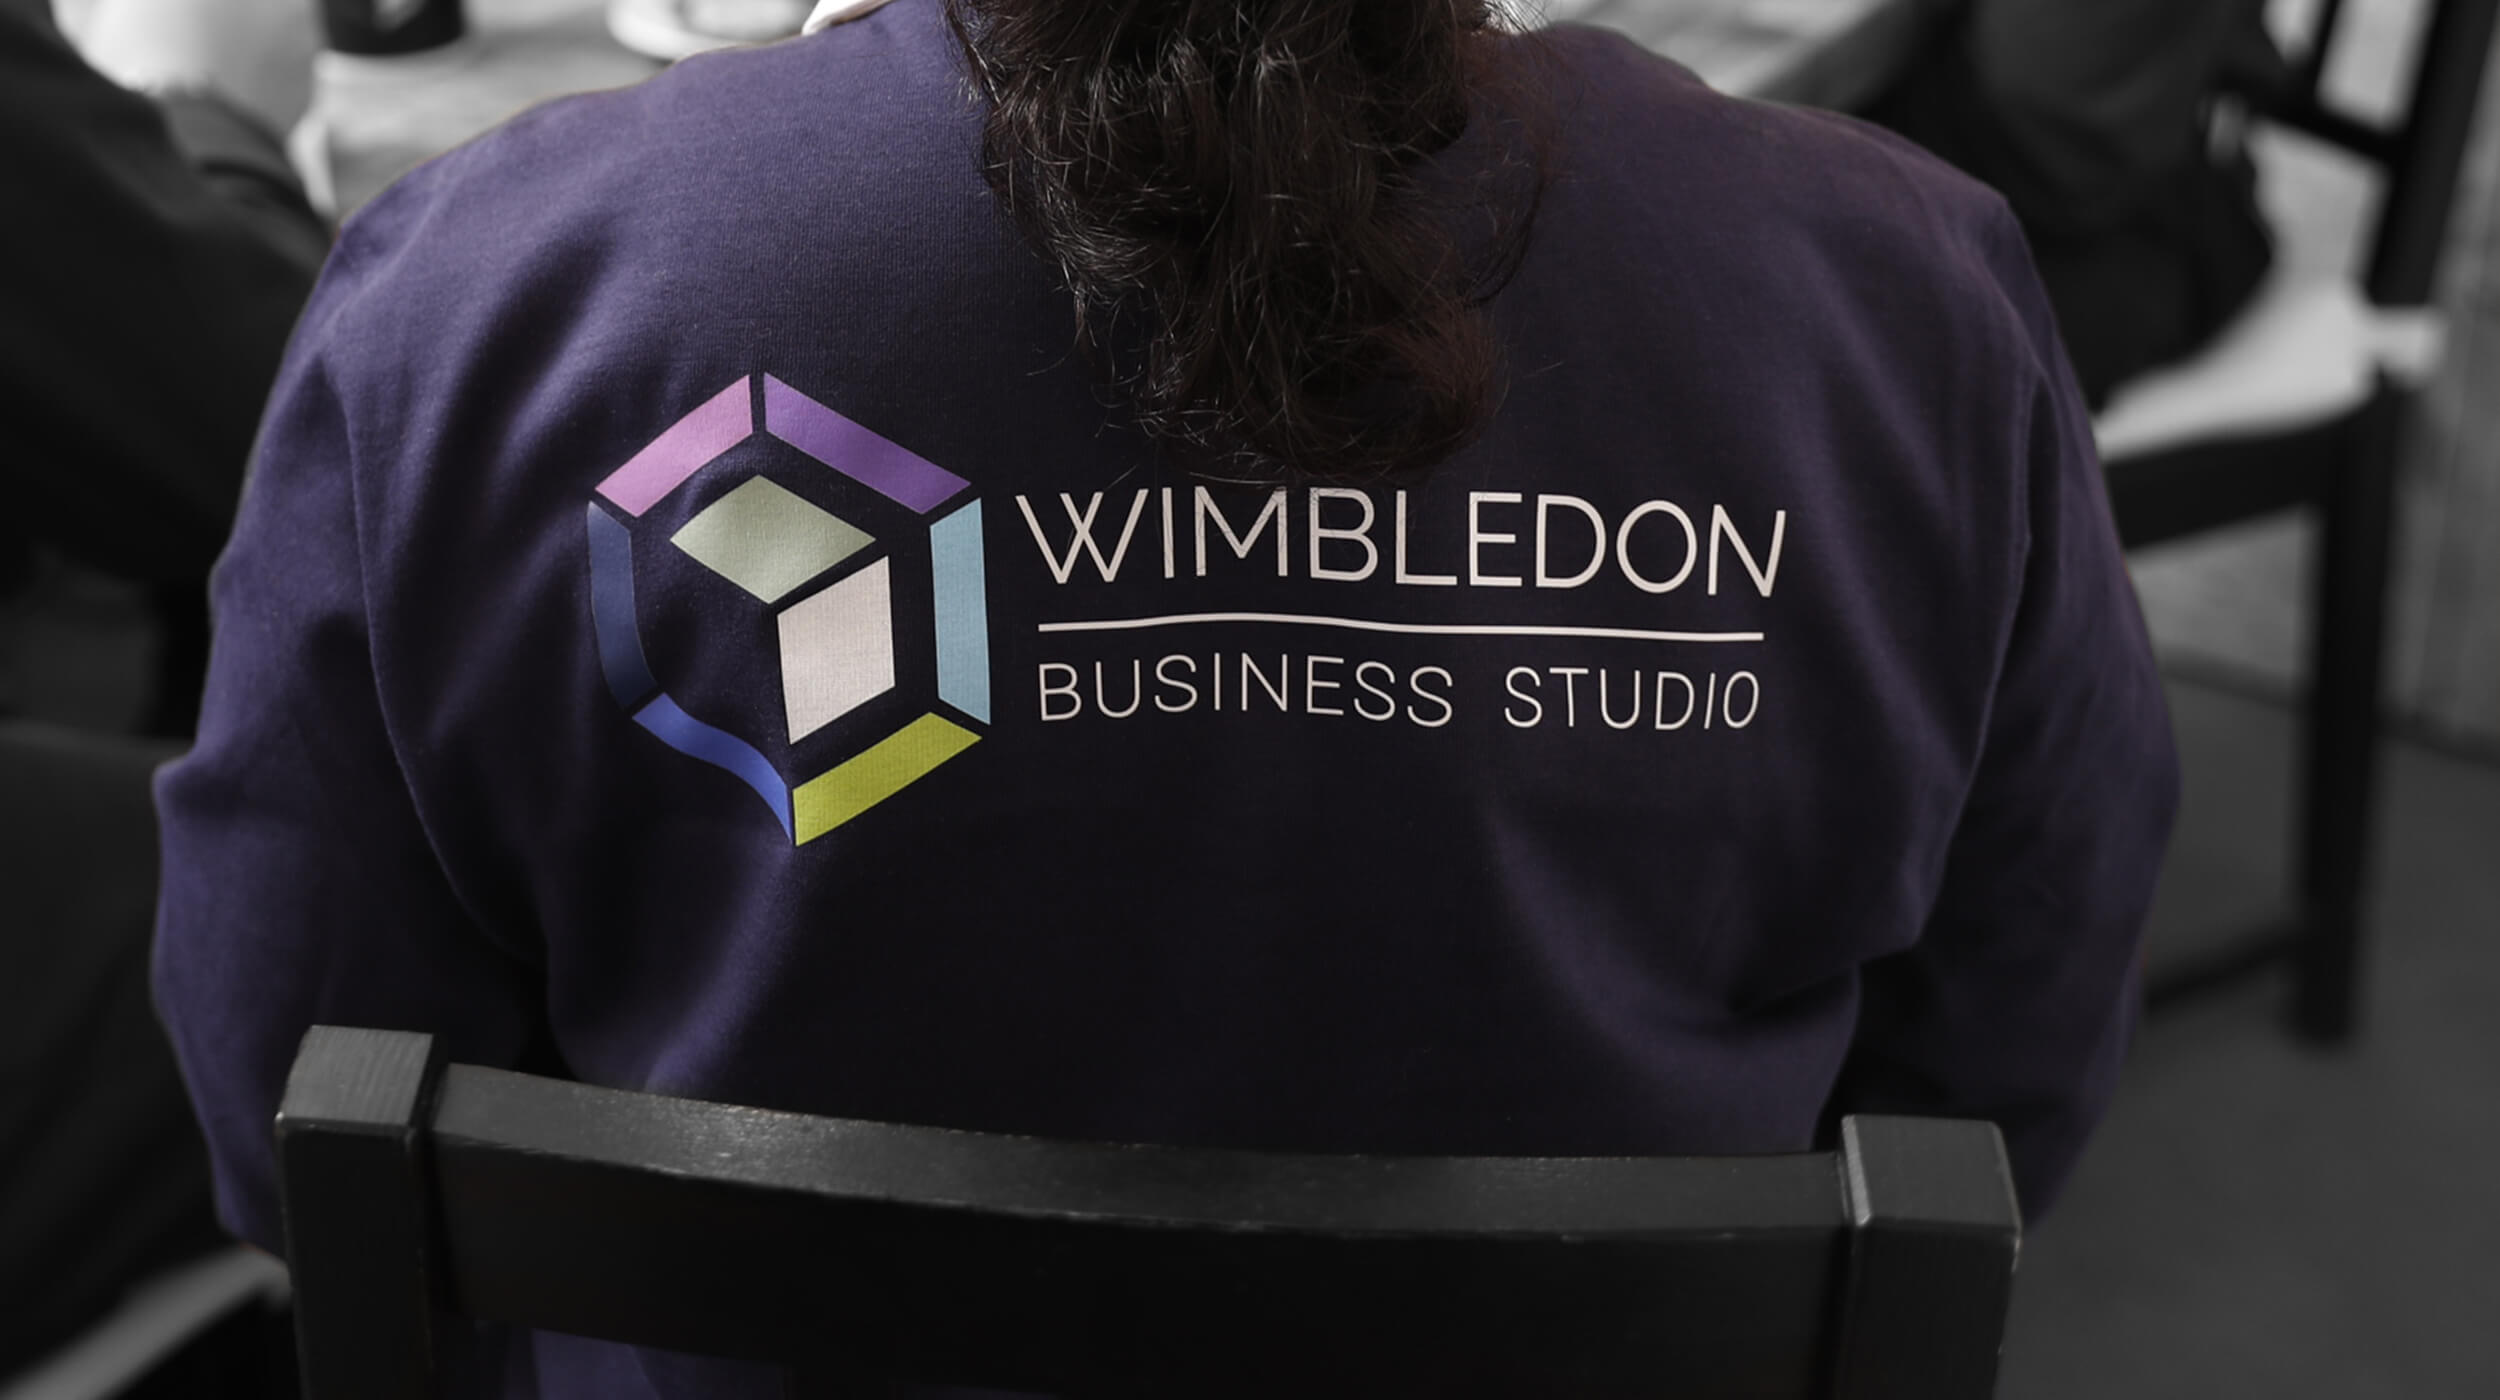 Wimbledon Business Studio Sweatshirts